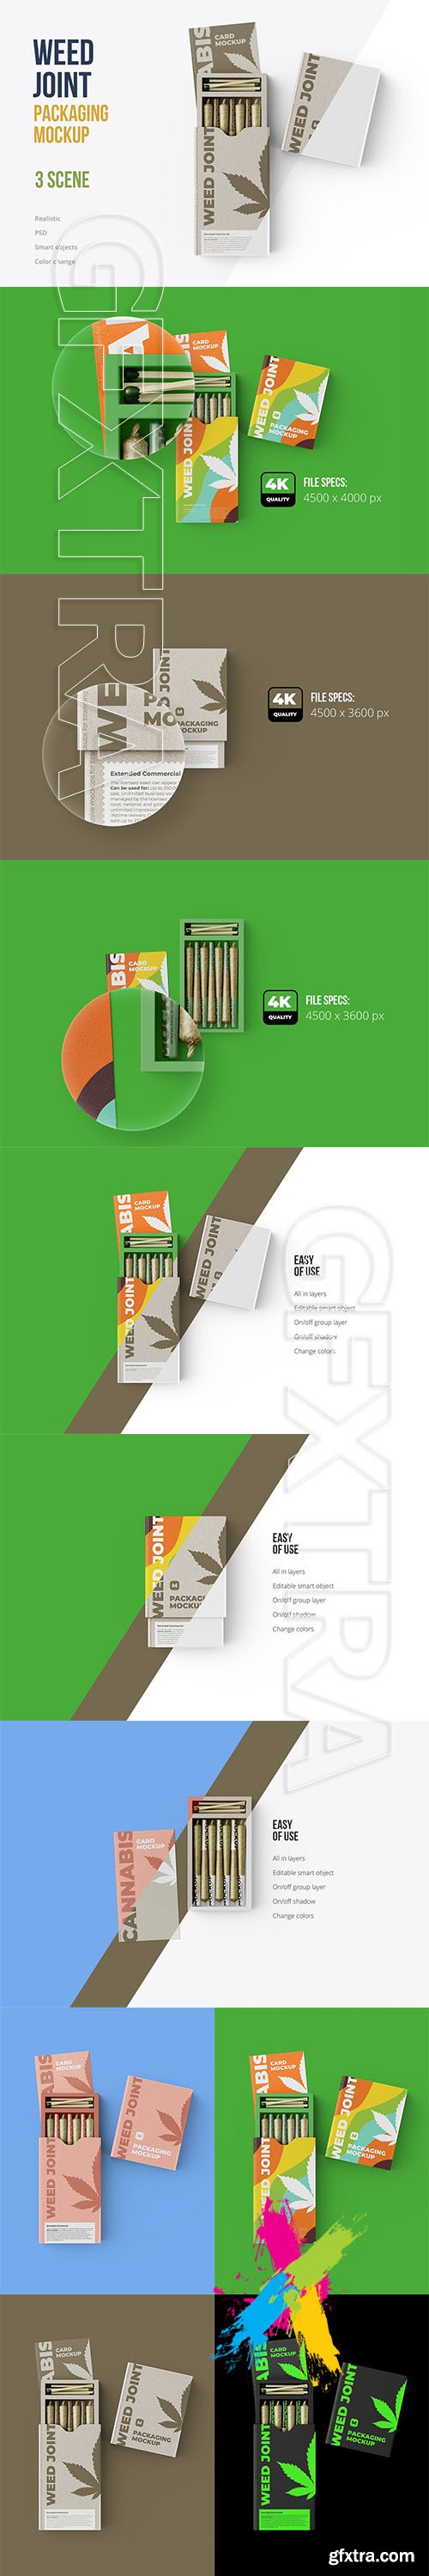 CreativeMarket - Weed Joint Packaging Mockup 4894490